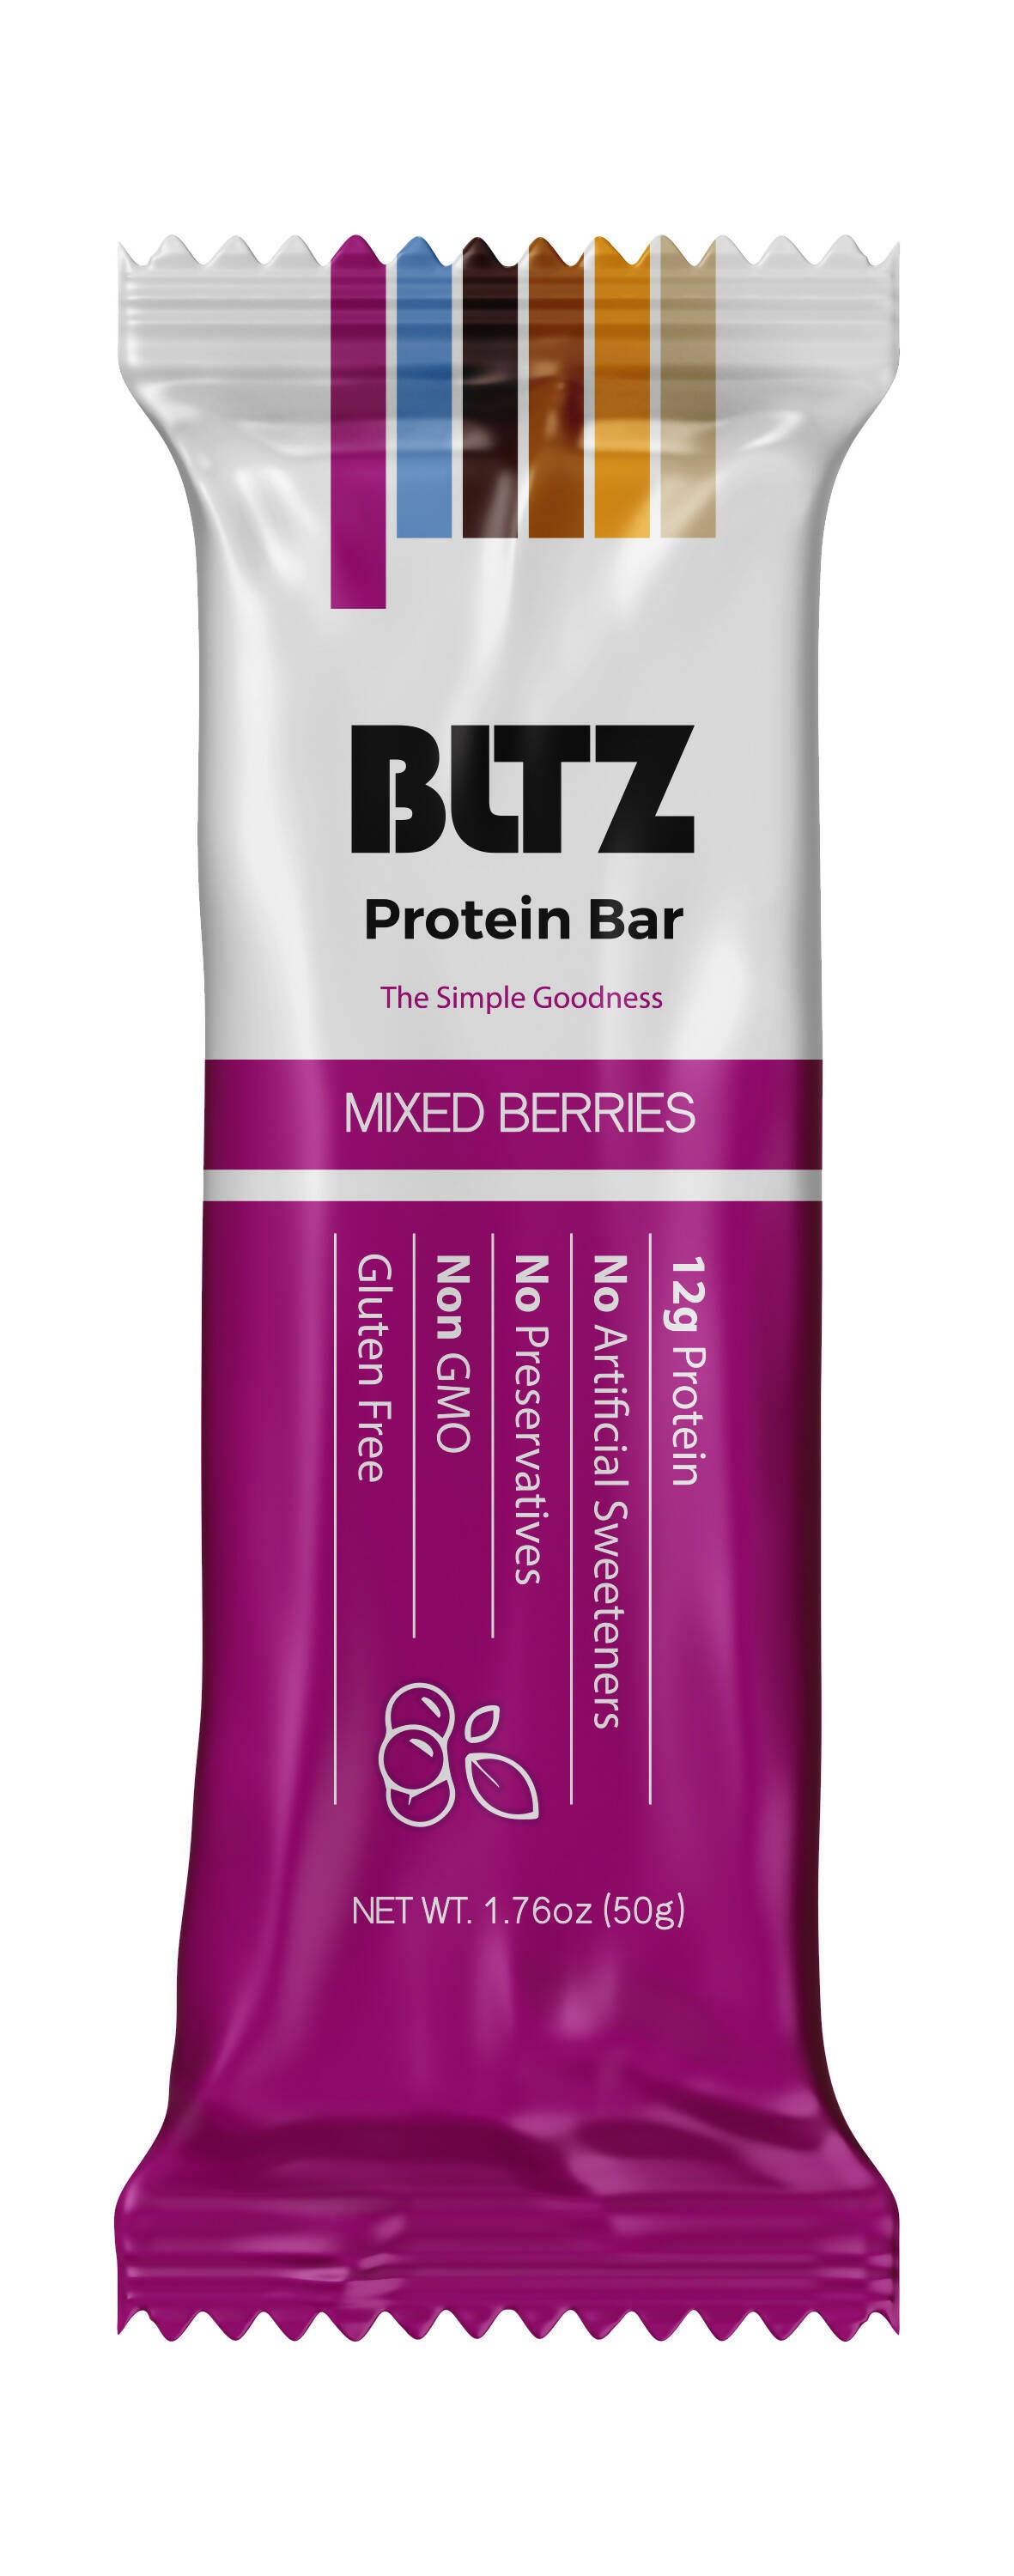 BLTZ Mixed Berries Box